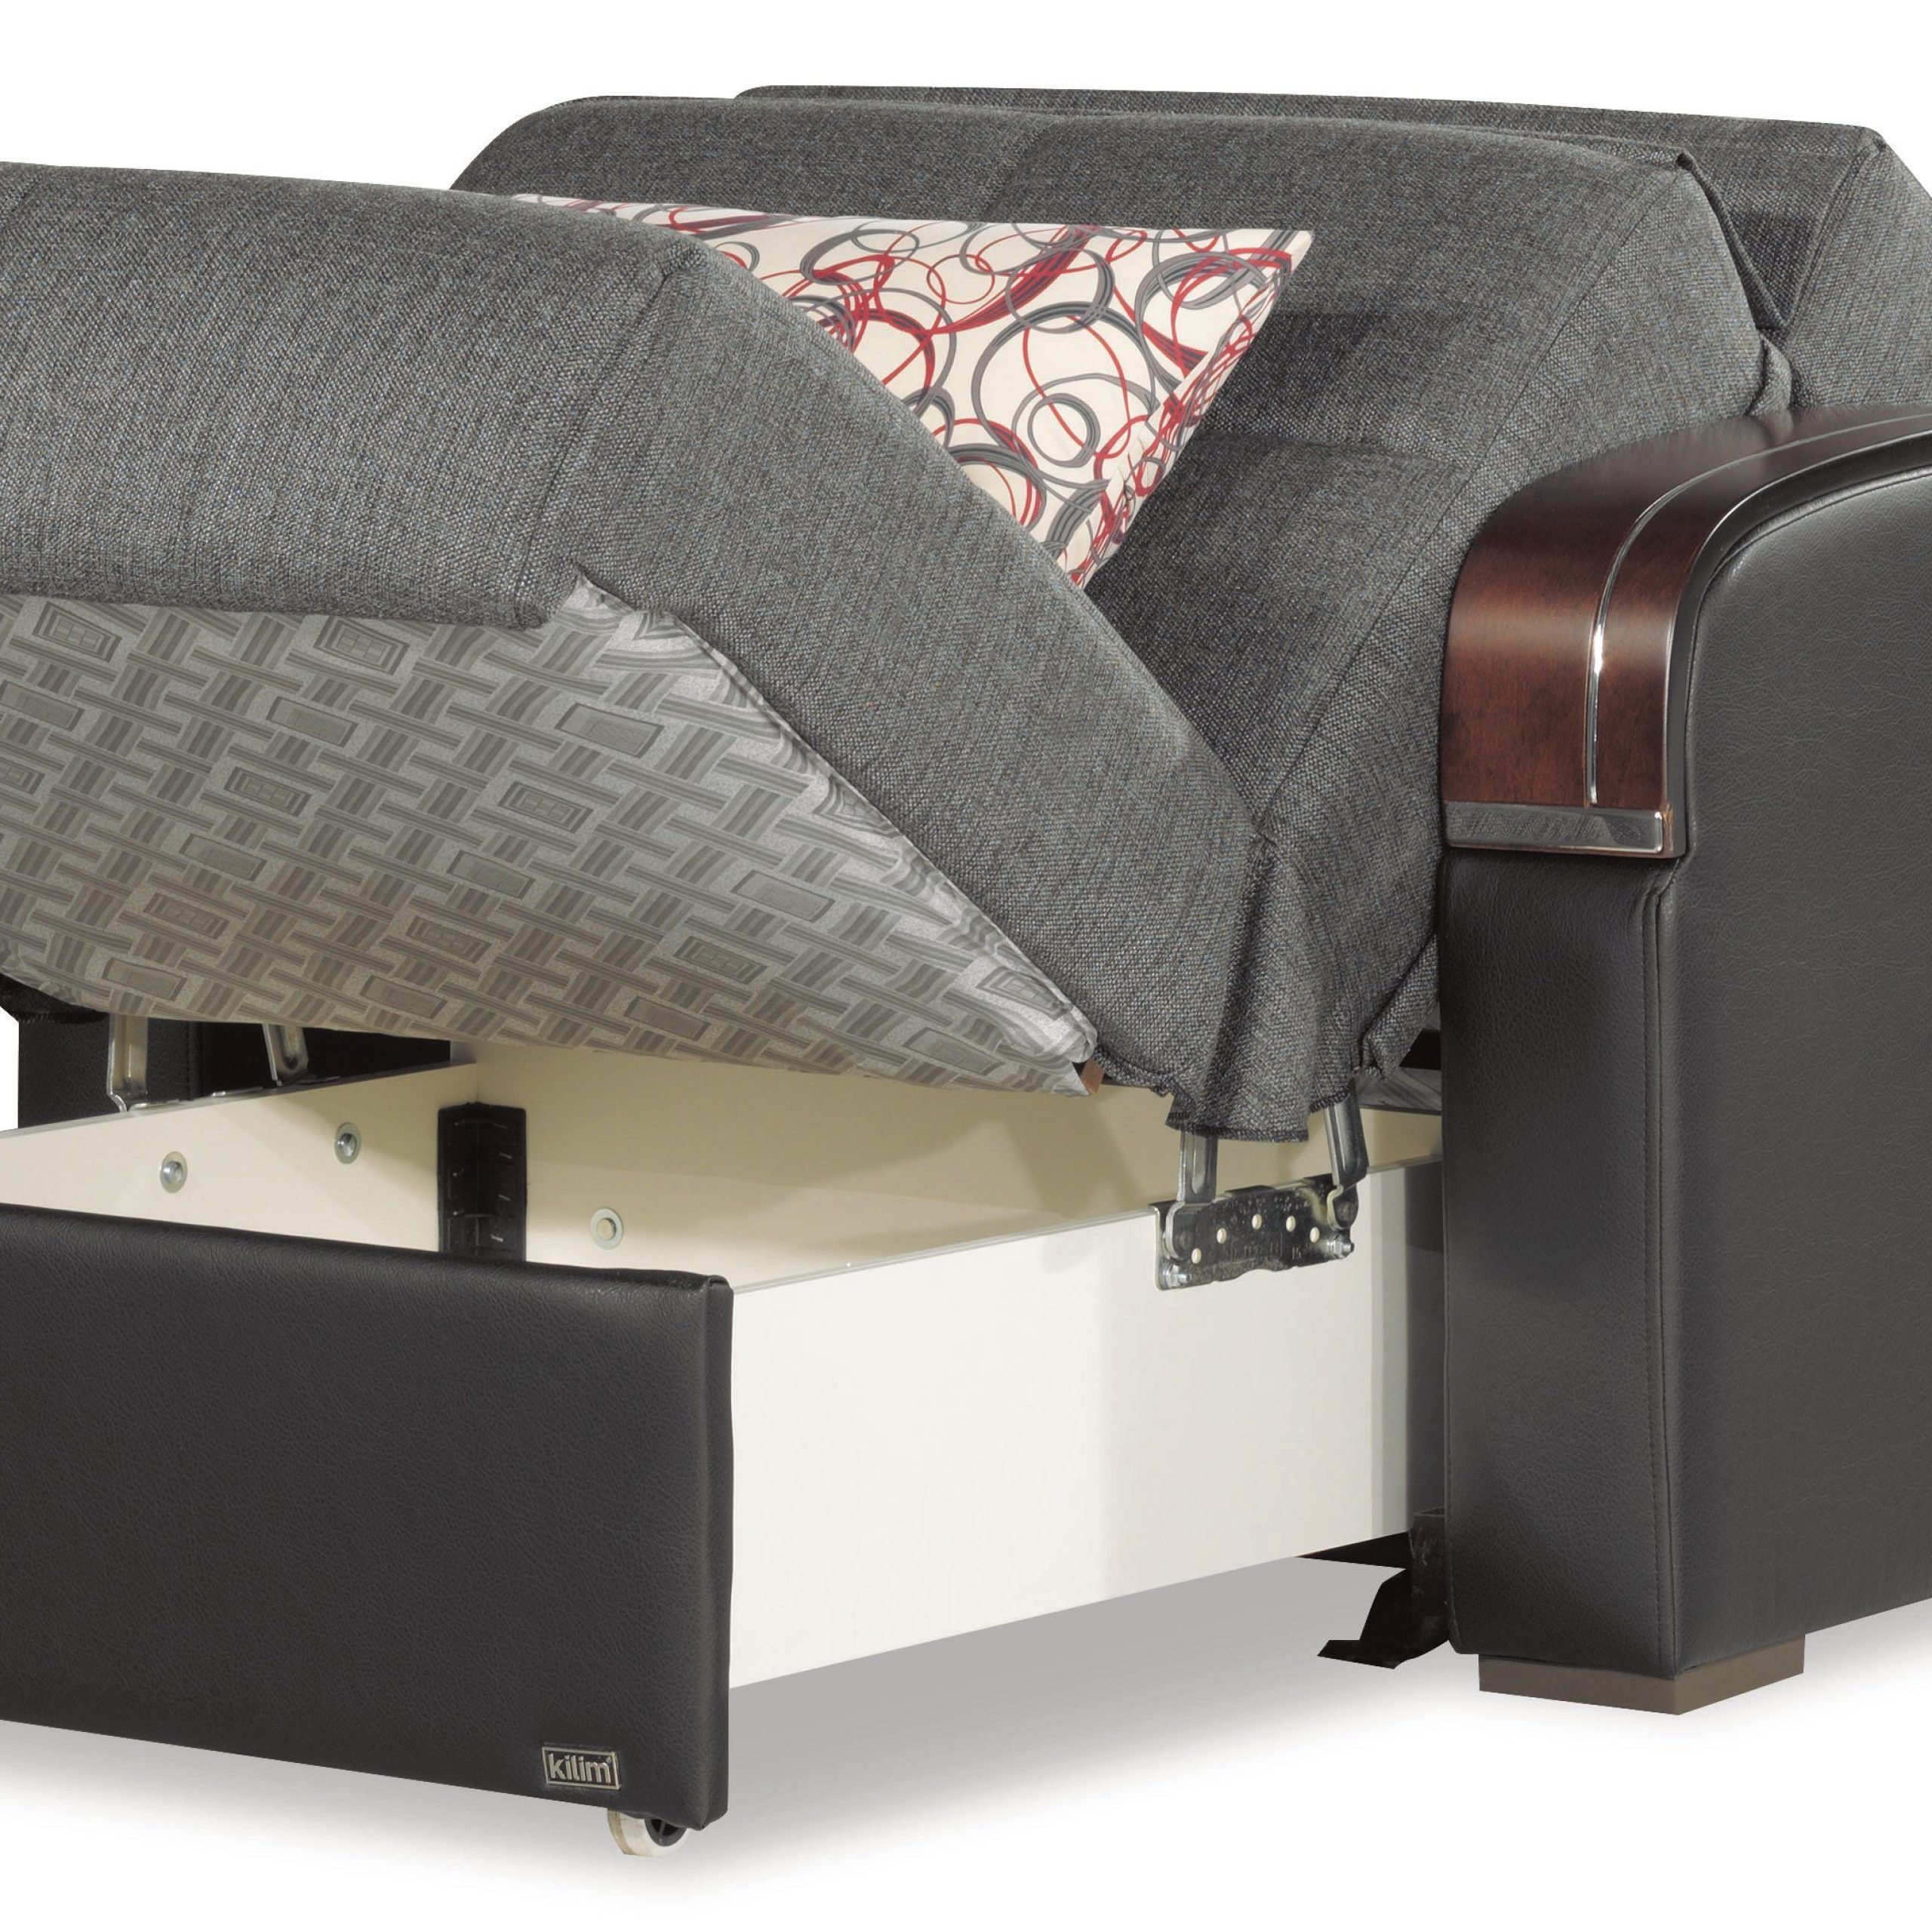 Sleep Plus Gray Convertible Chair Bedcasamode With Regard To 4 In 1 Convertible Sleeper Chair Beds (View 8 of 20)